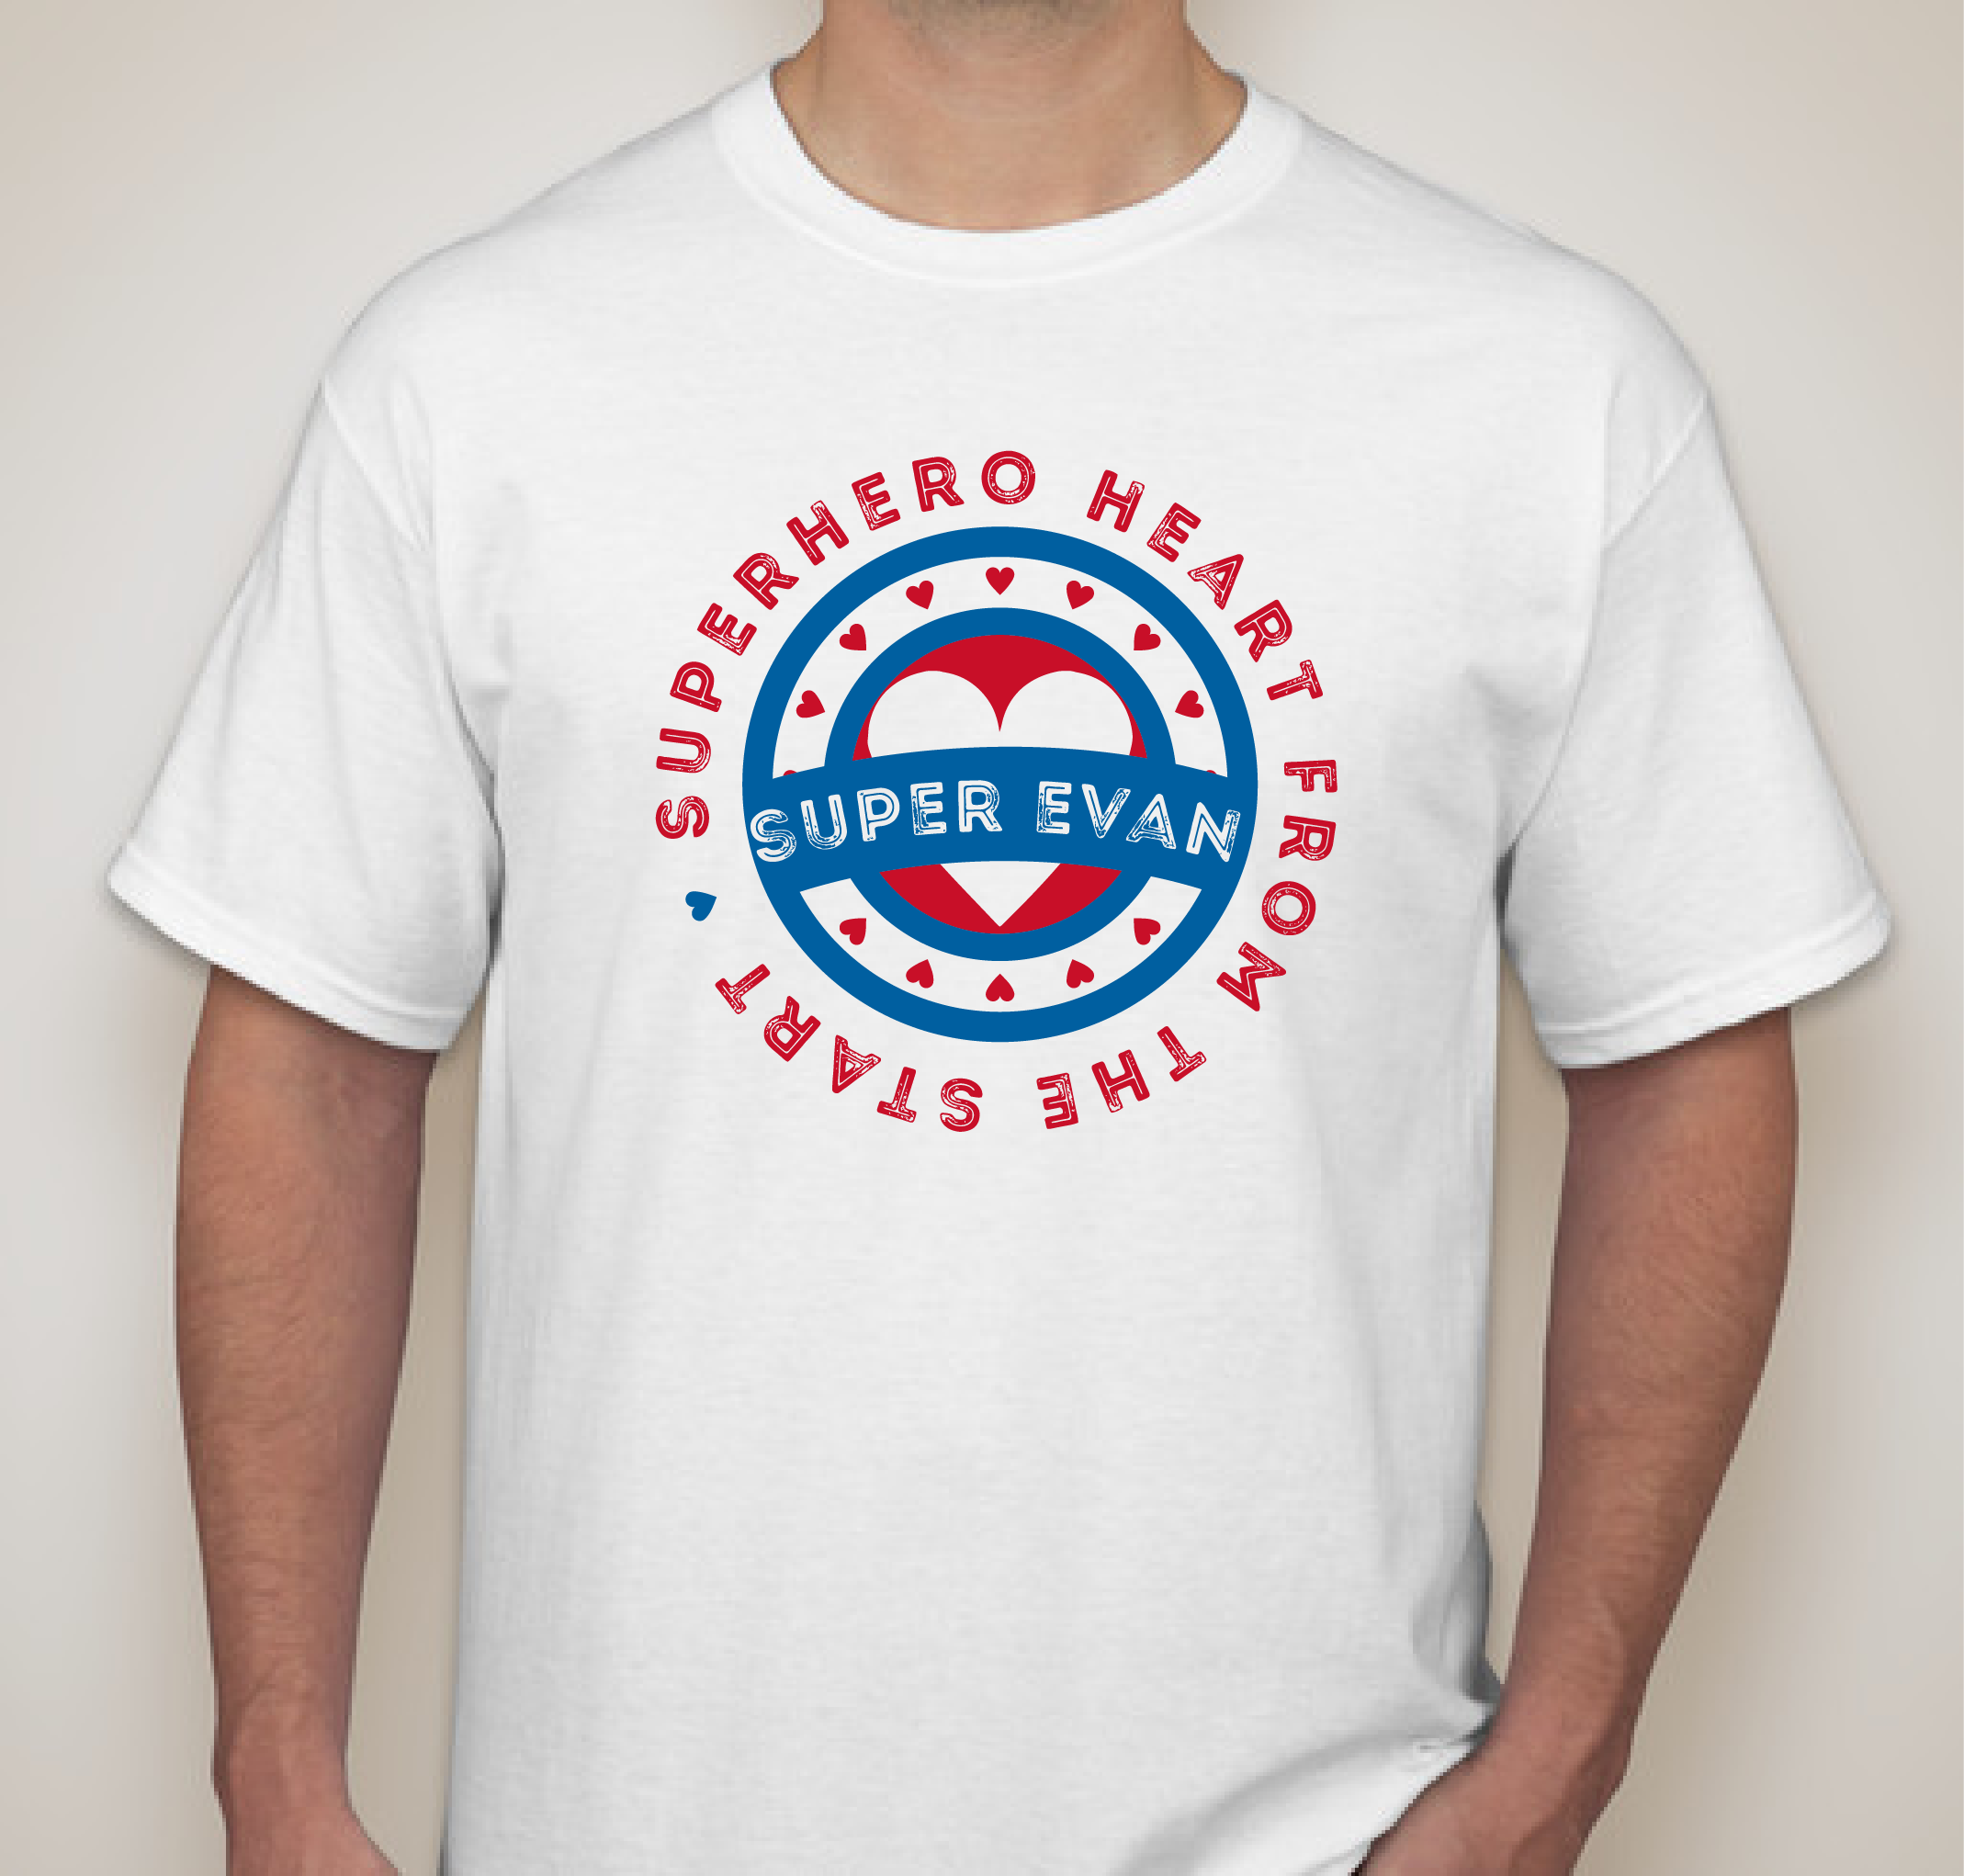 Evans Journey Fundraiser - unisex shirt design - front